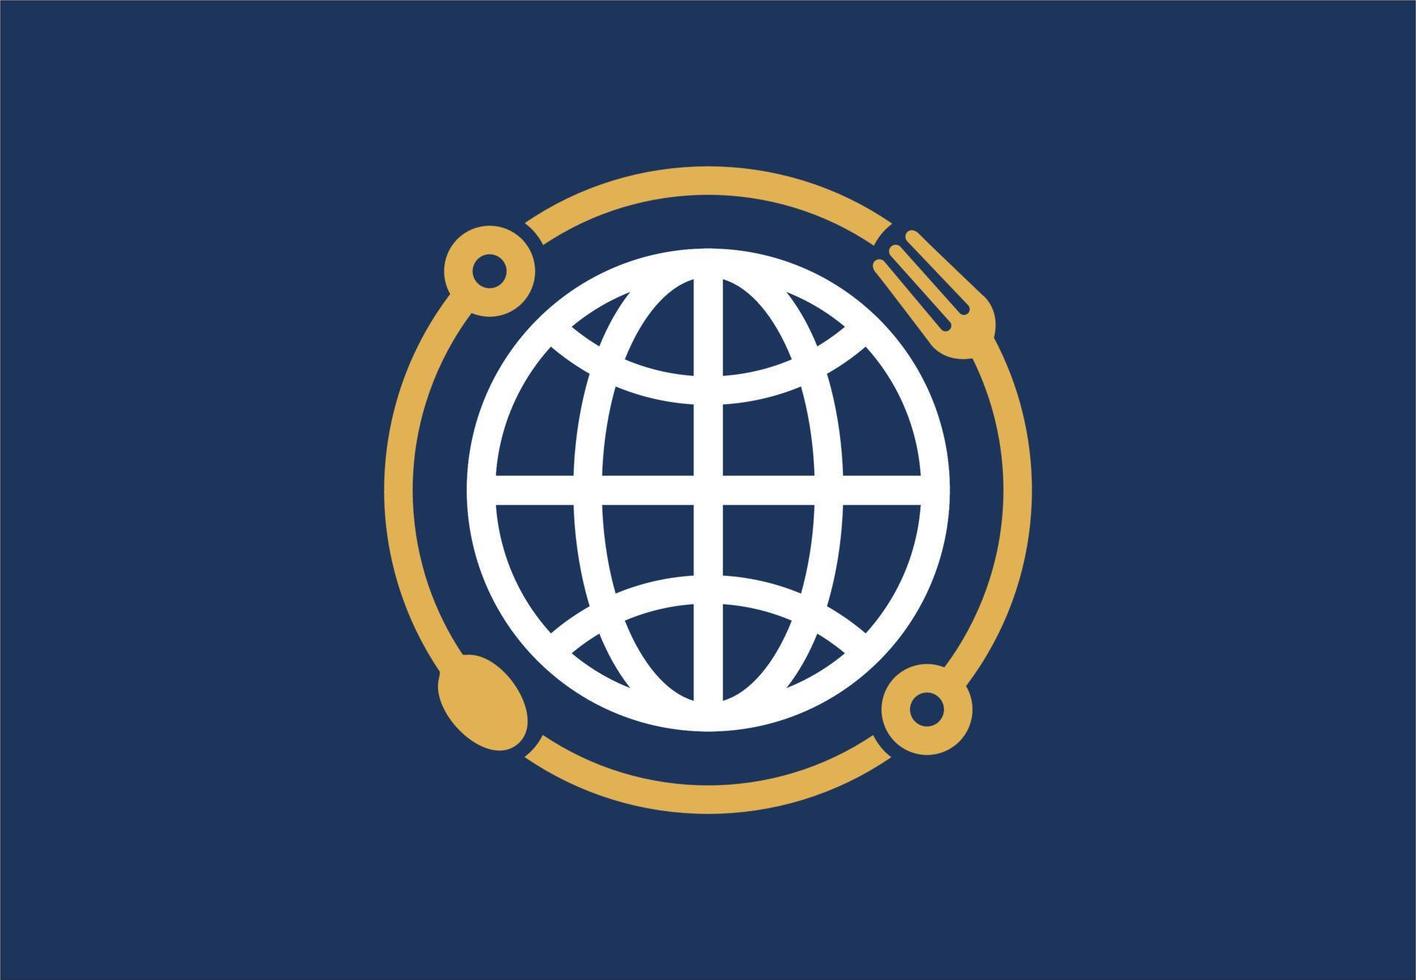 graphic design of global food logo vector